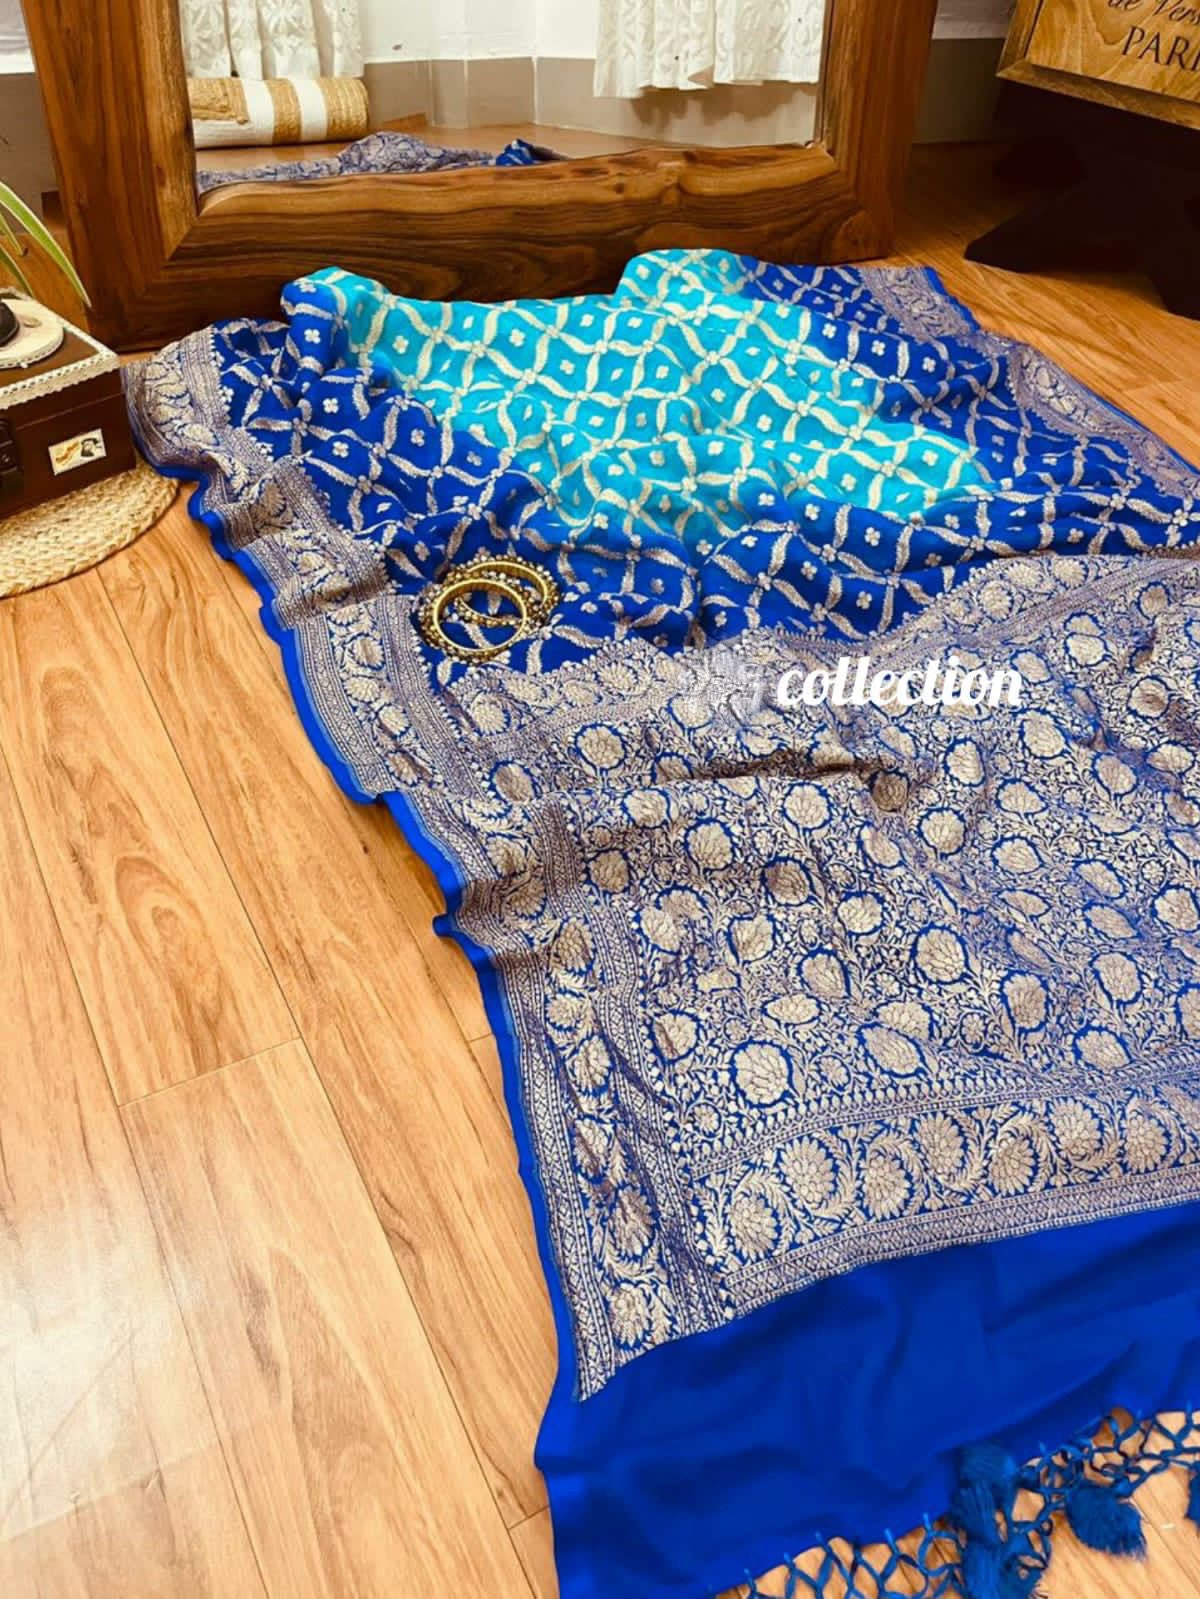 Shaded Blue Banarsi Gorgette Saree